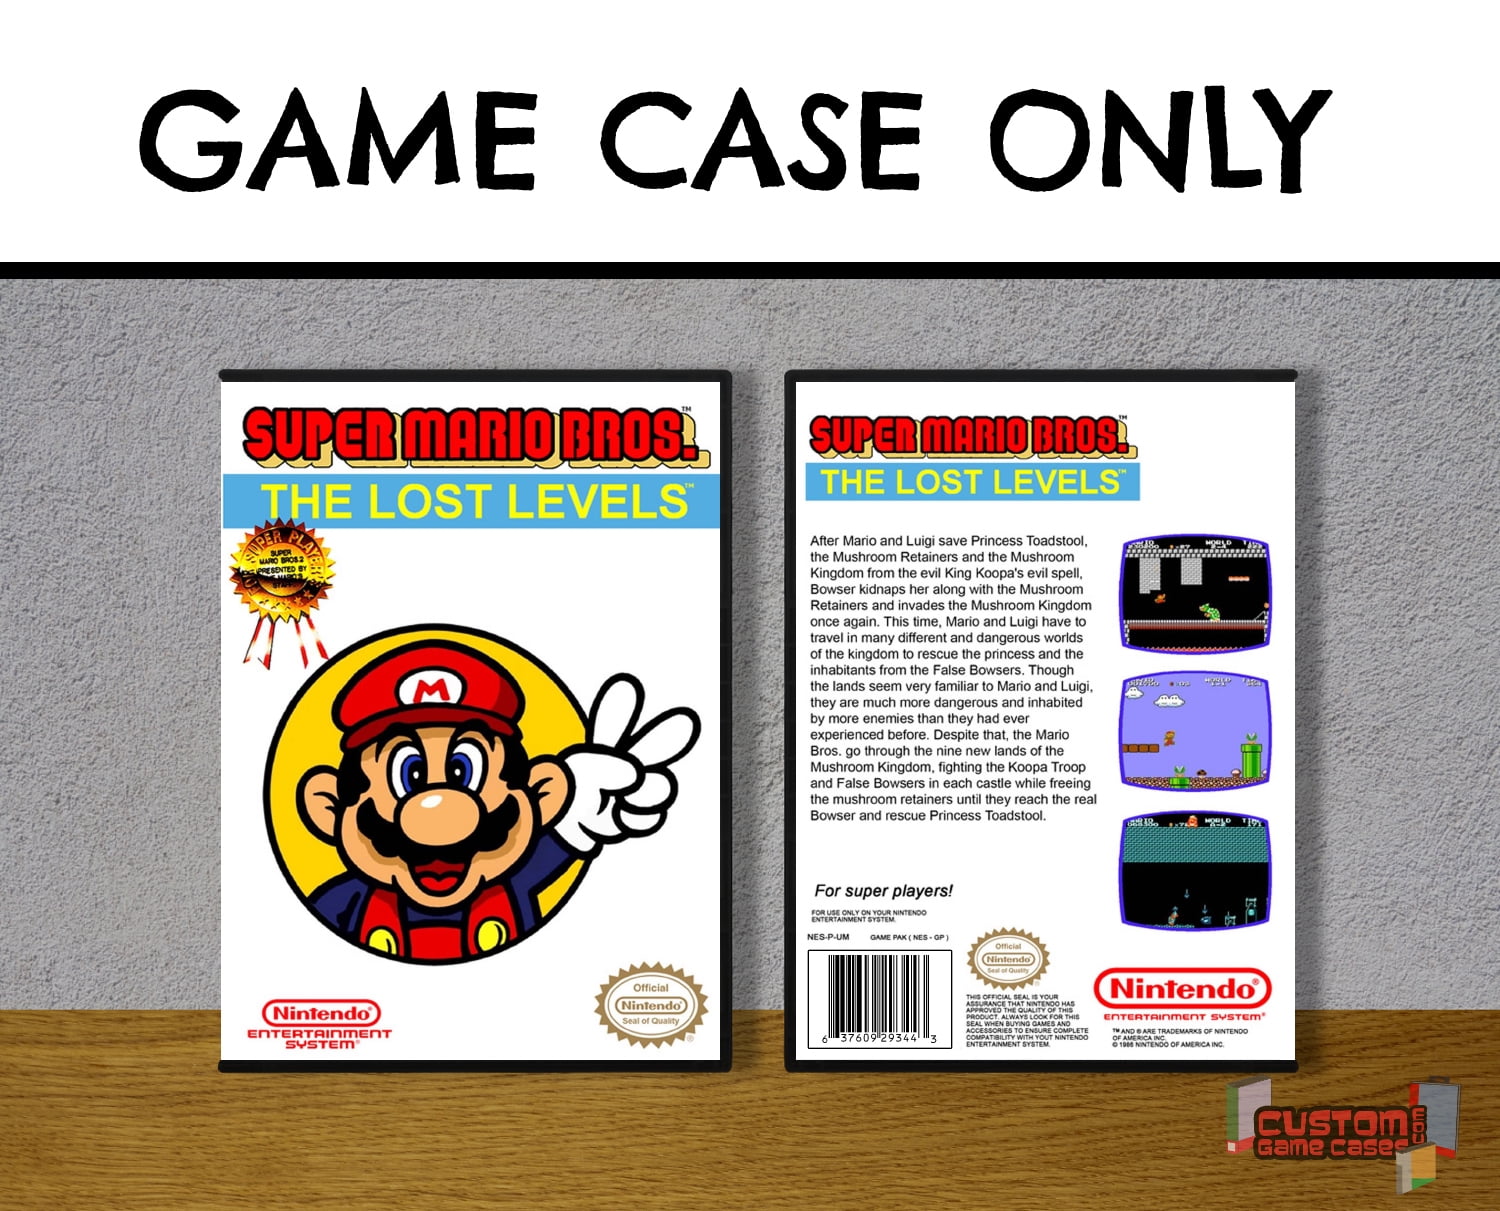 Super Mario™ Bros. 2 (JP) Alt Cover - (NESDG) Nintendo Entertainment System  - Game Case Only - No Game 